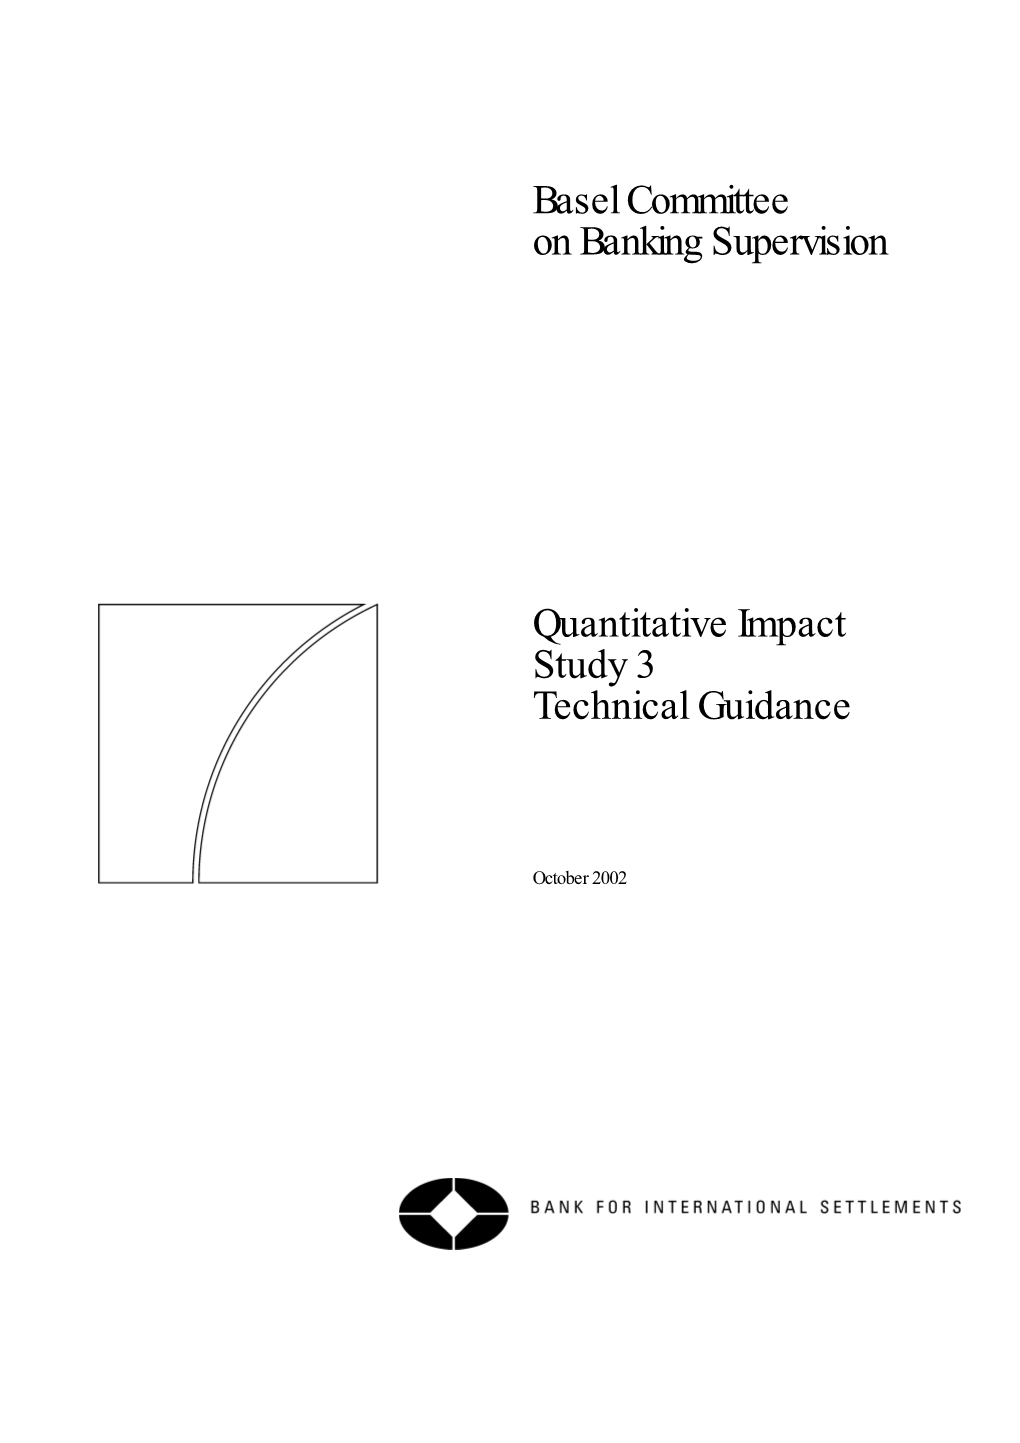 Quantitative Impact Study 3: Technical Guidance